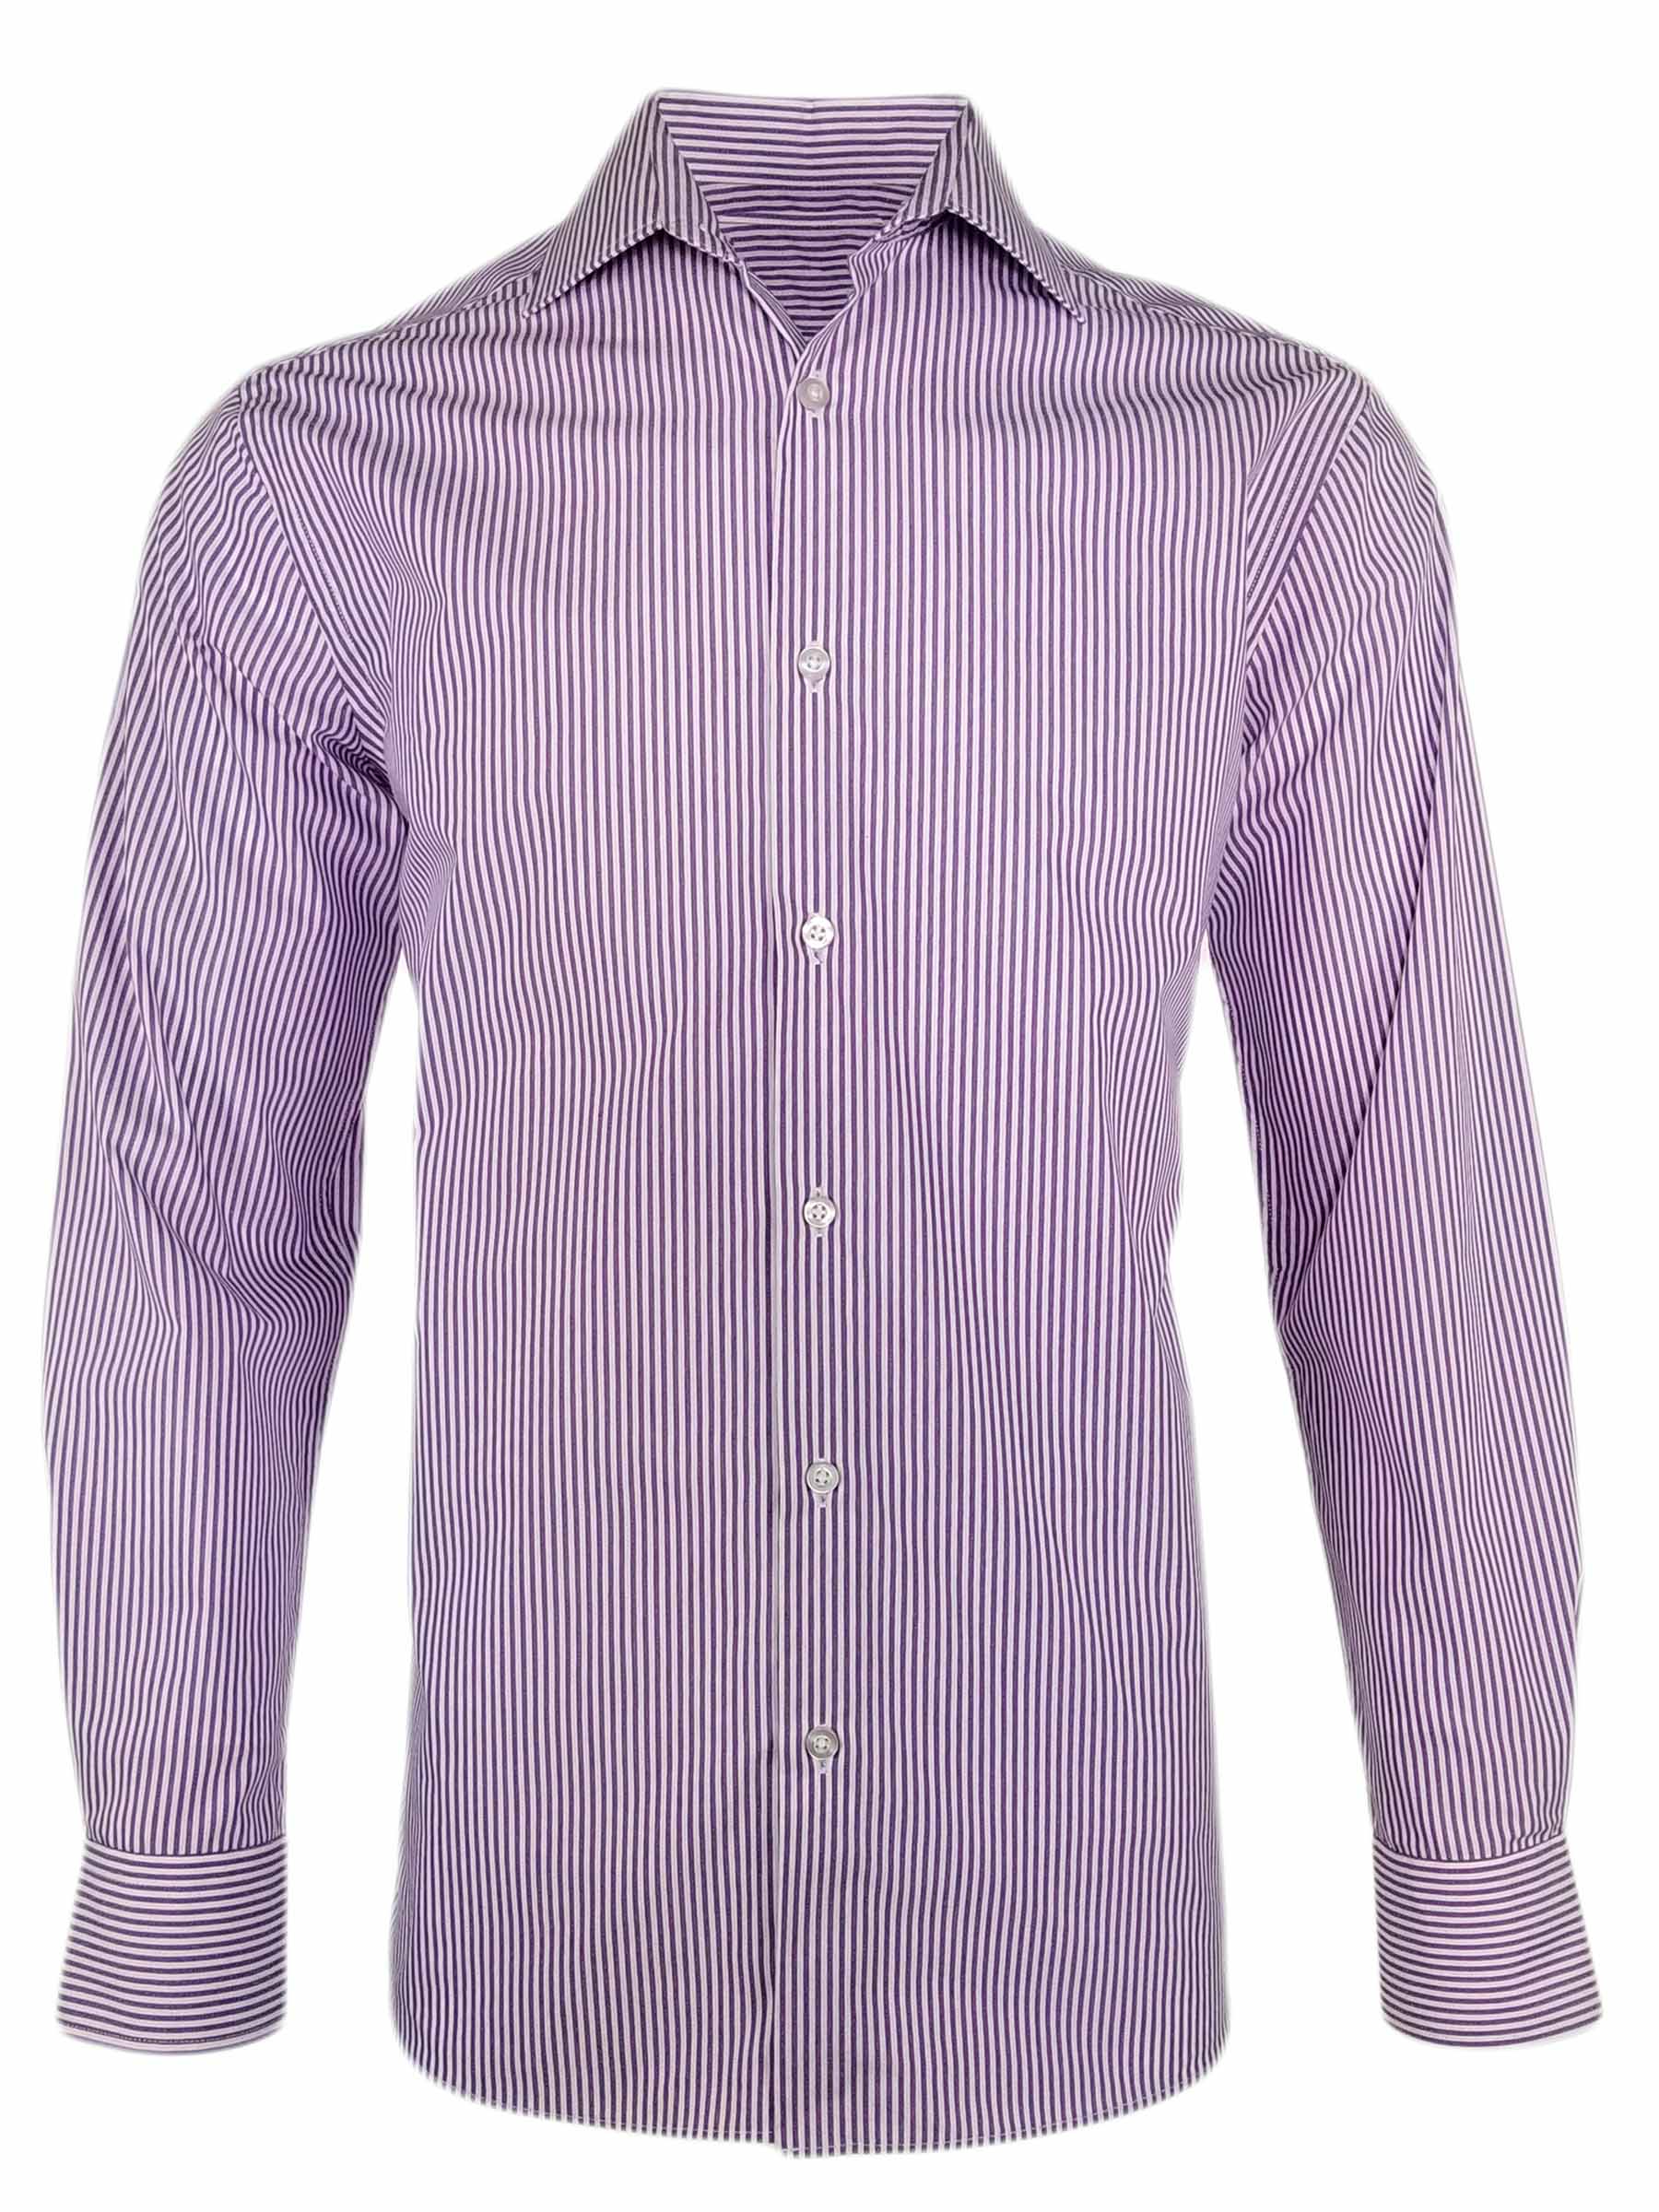 Men's Milan Shirt - Purple and White Stripe Long Sleeve - Uniform Edit